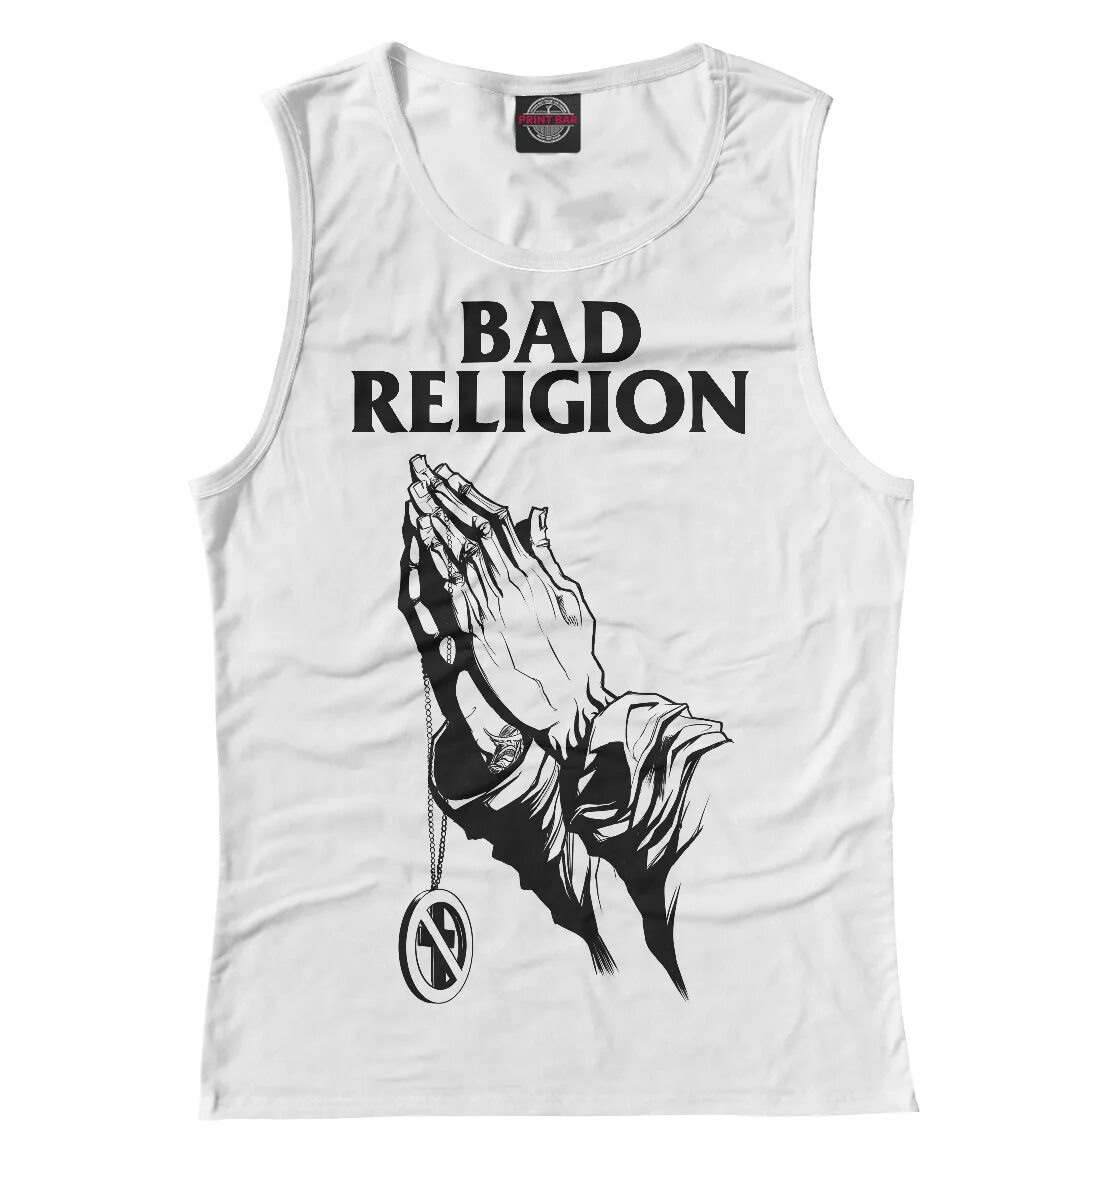 Bad collection. Bad Religion футболка. Футболка Religion мужская. Майка религион. Майки Religion мужские.